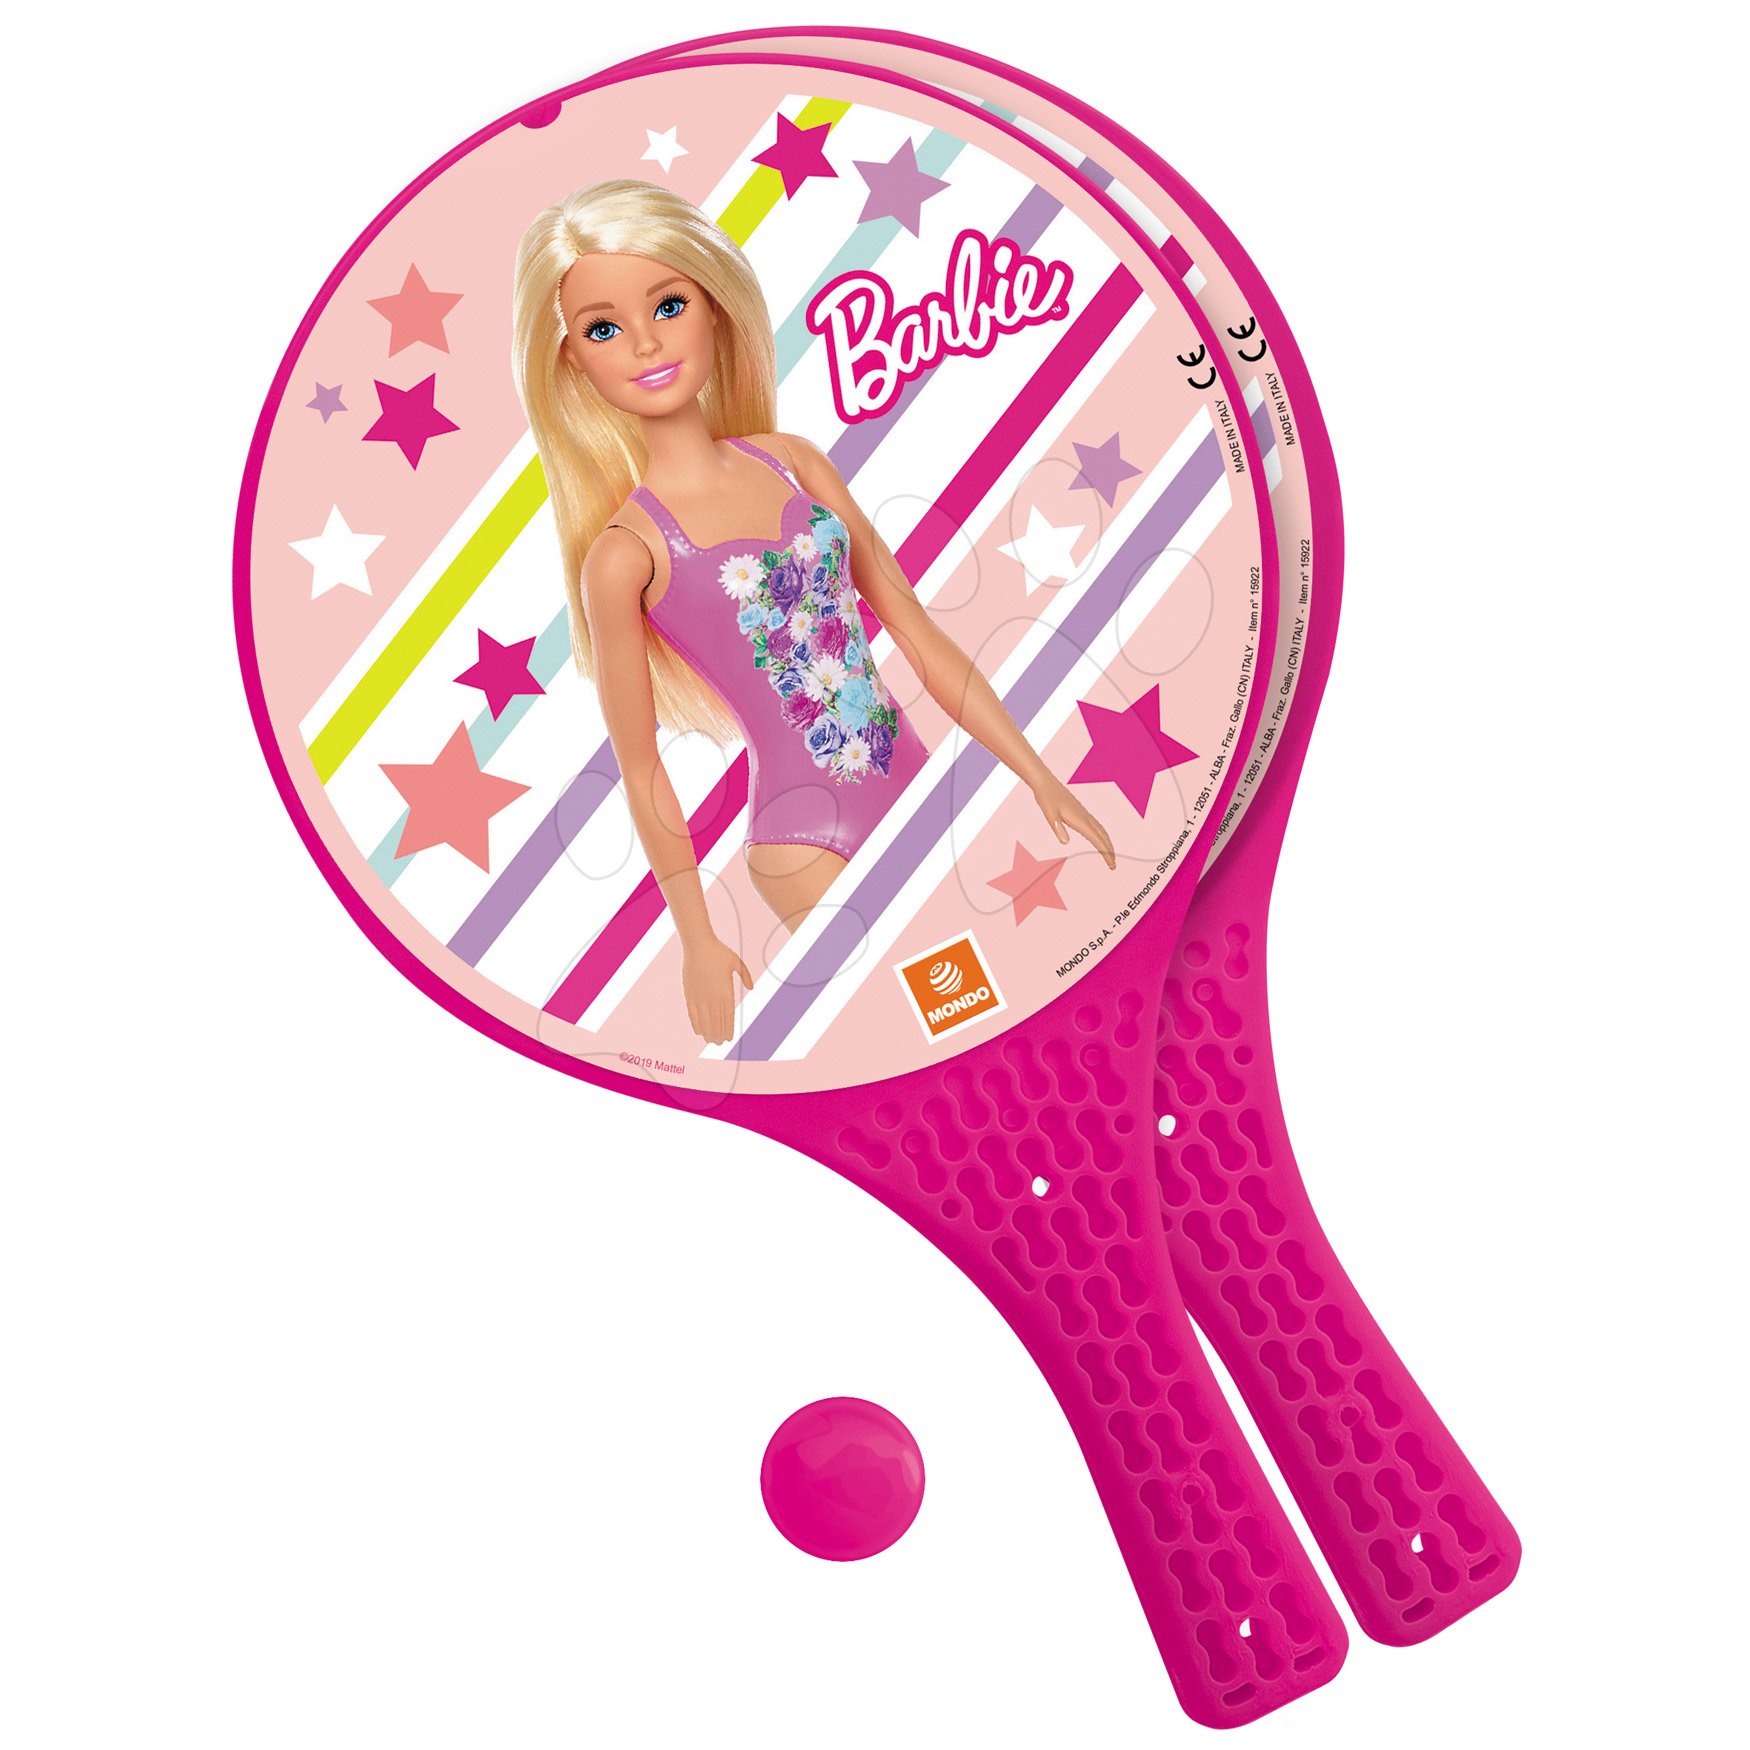 Tenis - Plážový tenis set Barbie Mondo s 2 raketami a míčkem